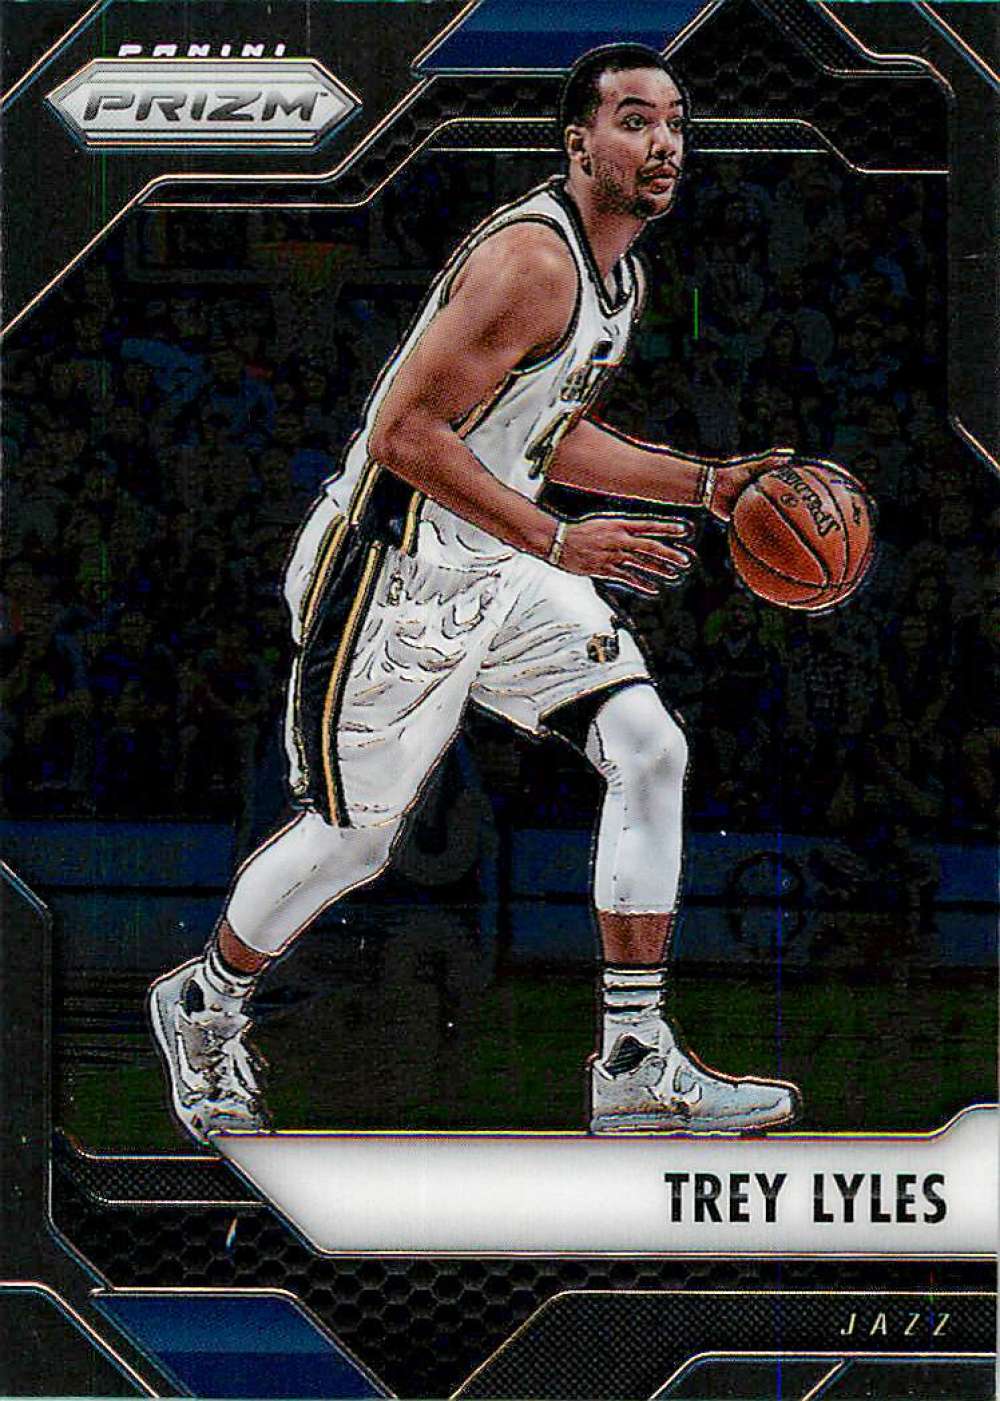 2016-17 Panini Prizm Basketball #108 Trey Lyles Utah Jazz Official NBA Trading Card